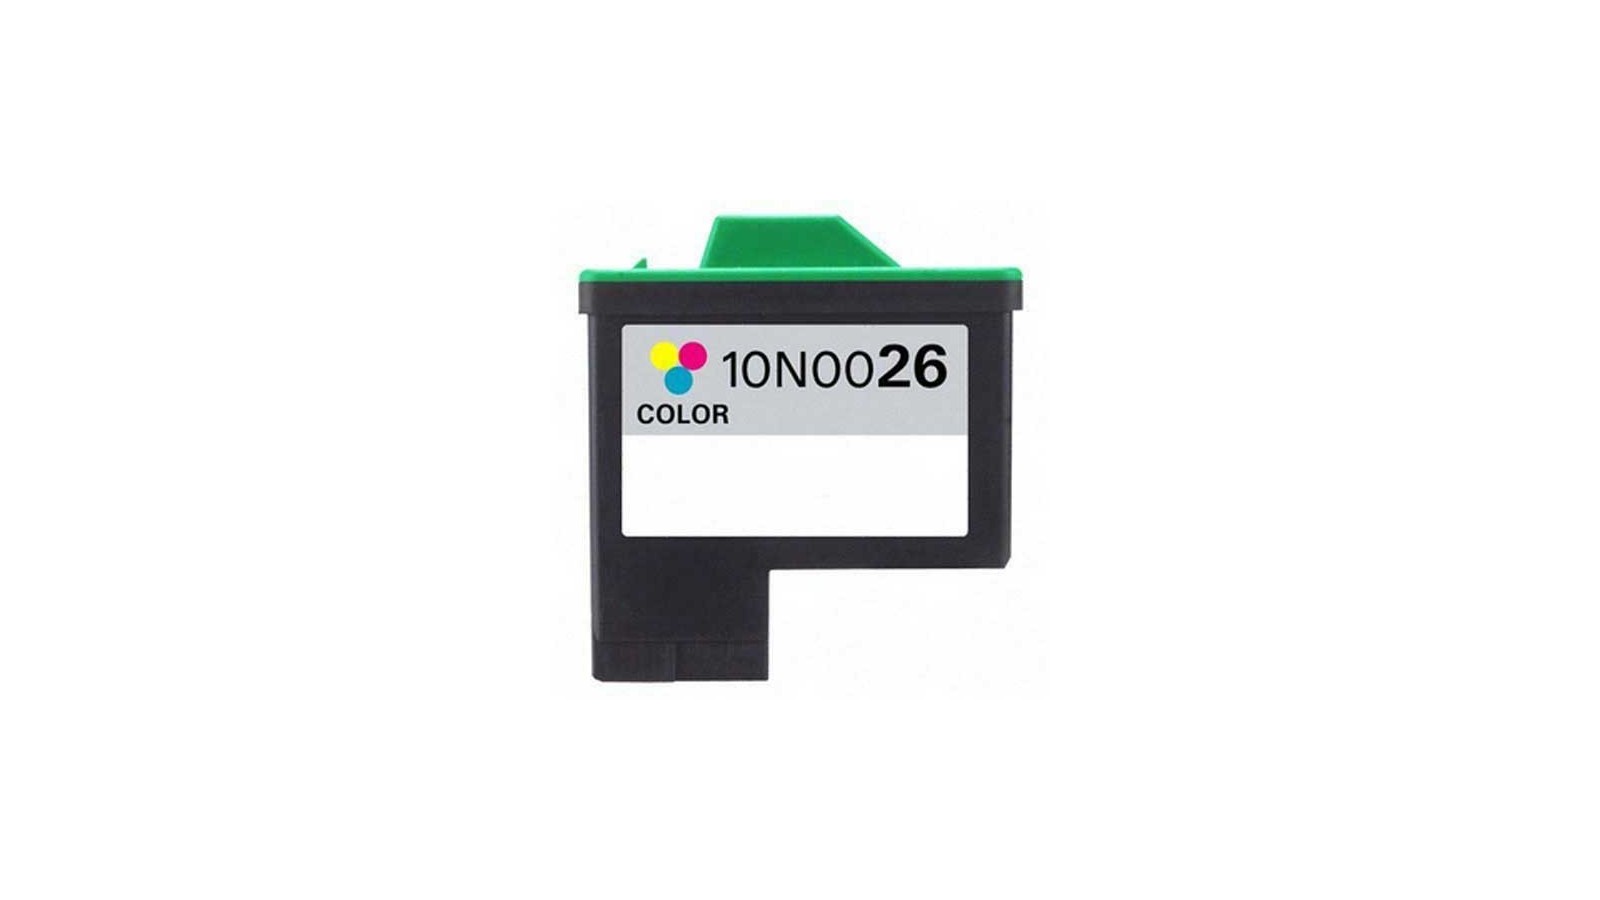 Cartuccia Inkjet compatibile Lexmark 26 10N0026 tricolor